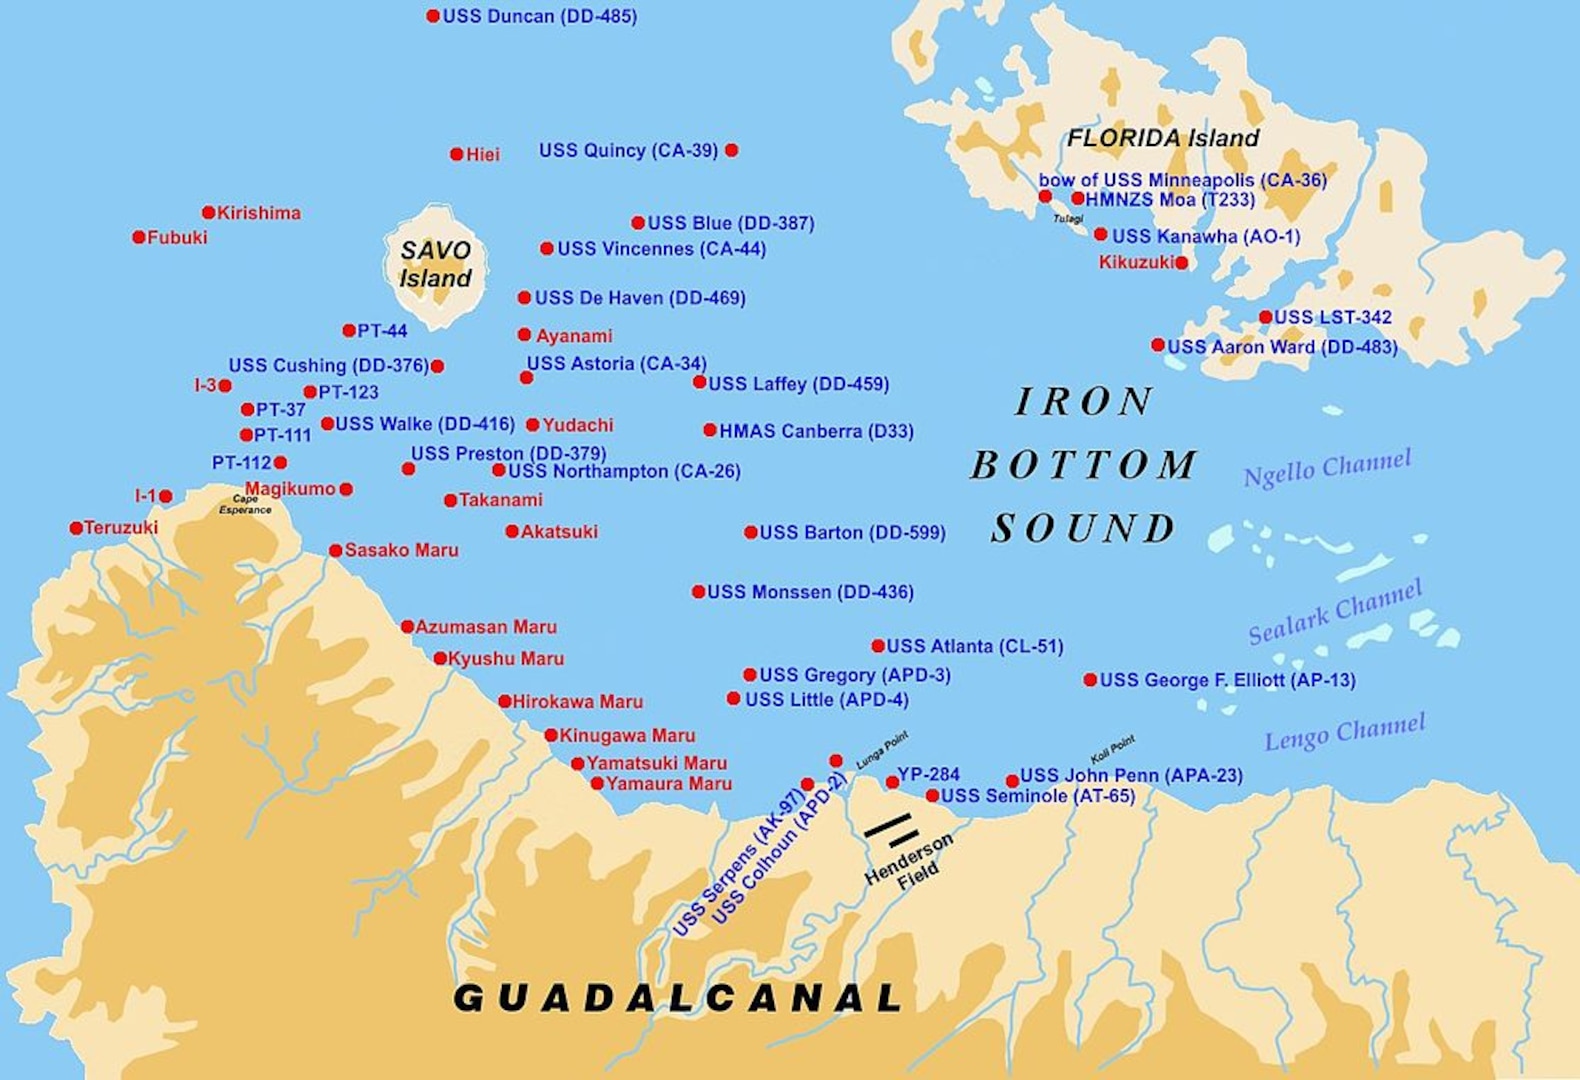 Chart showing Guadalcanal, Savo Island, Iron Bottom Sound, Florida Island, and Tulagi Island. (Wikipedia image by user W.wolny (CC BY-SA 3.0), courtesy of Wikimedia Commons)